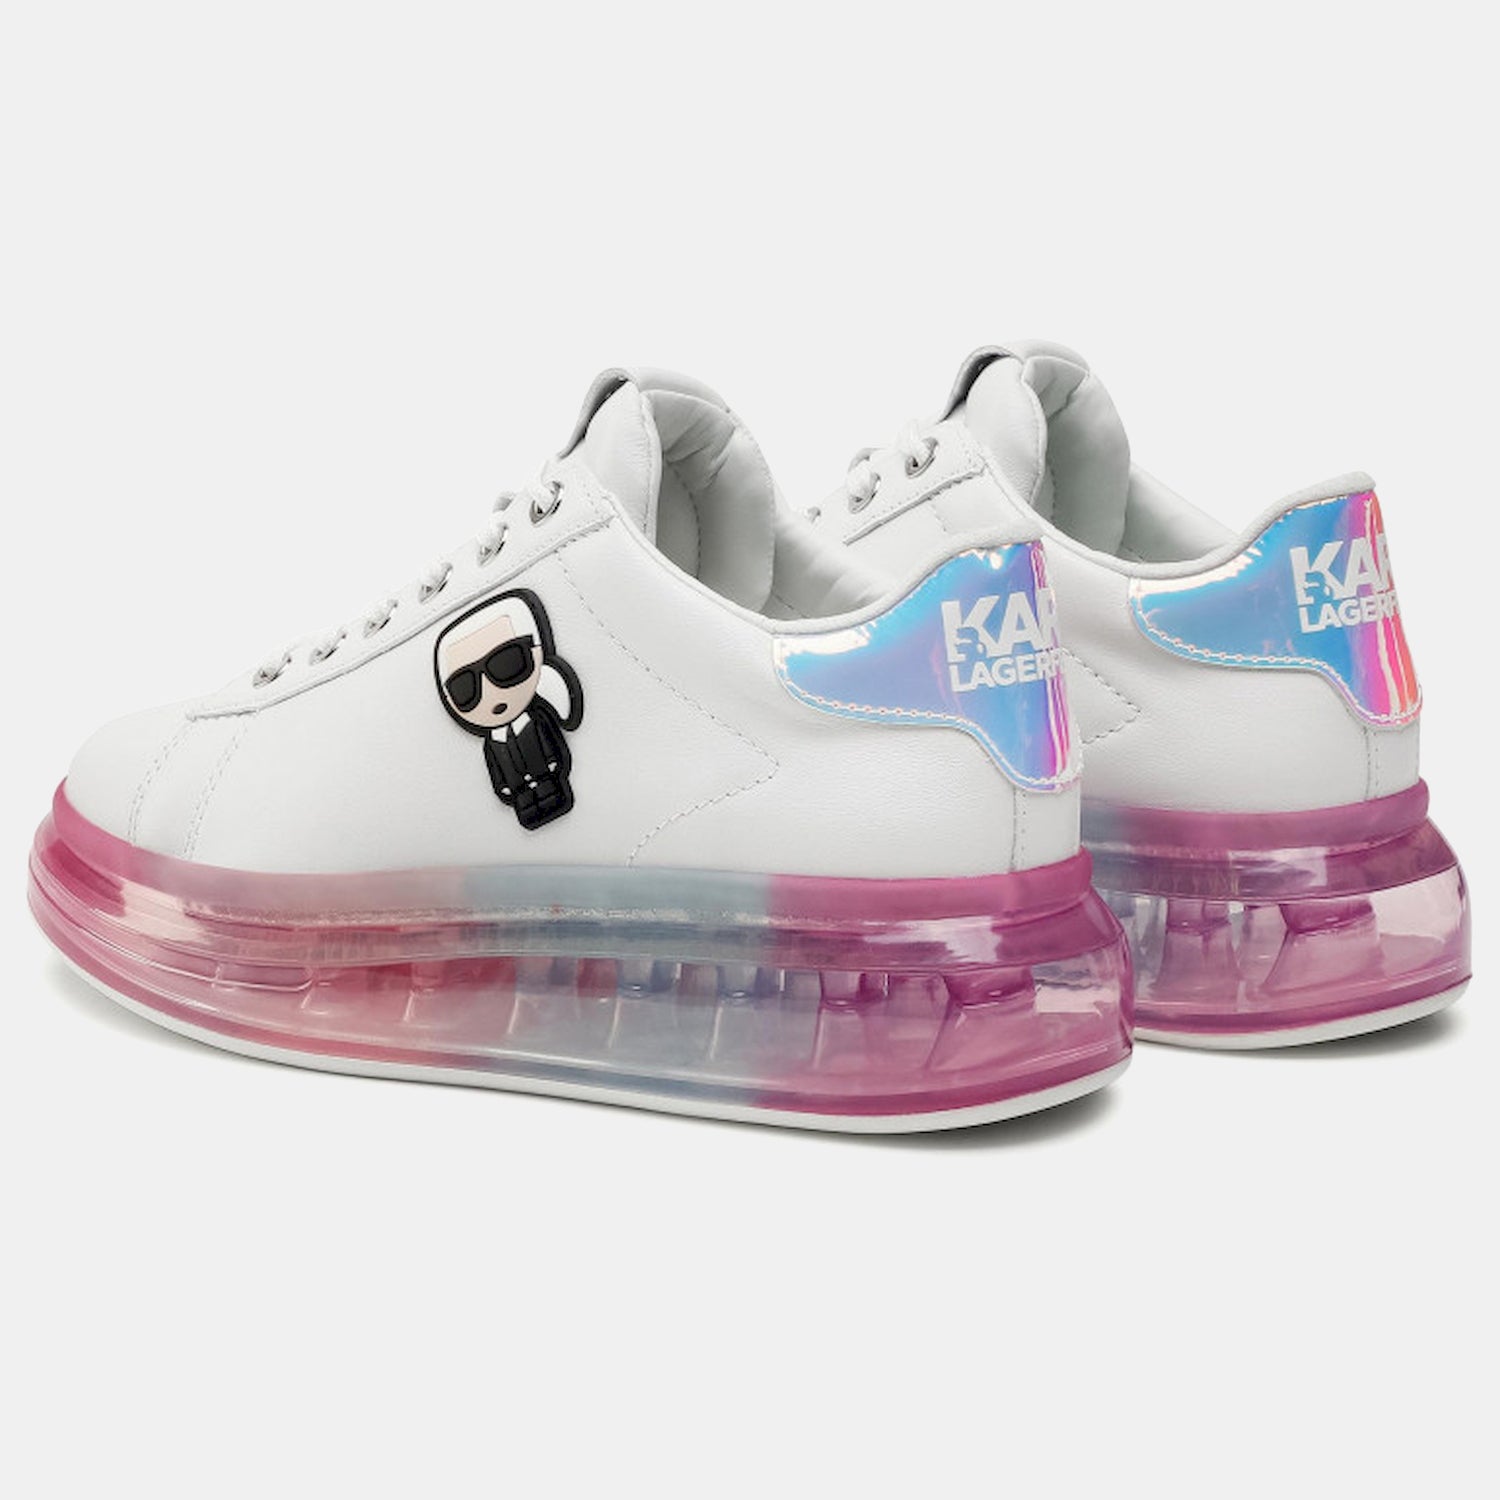 Karl Lagerfeld Sapatilhas Sneakers Shoes Kl62689 Whi Pink Branco Rosa_shot2